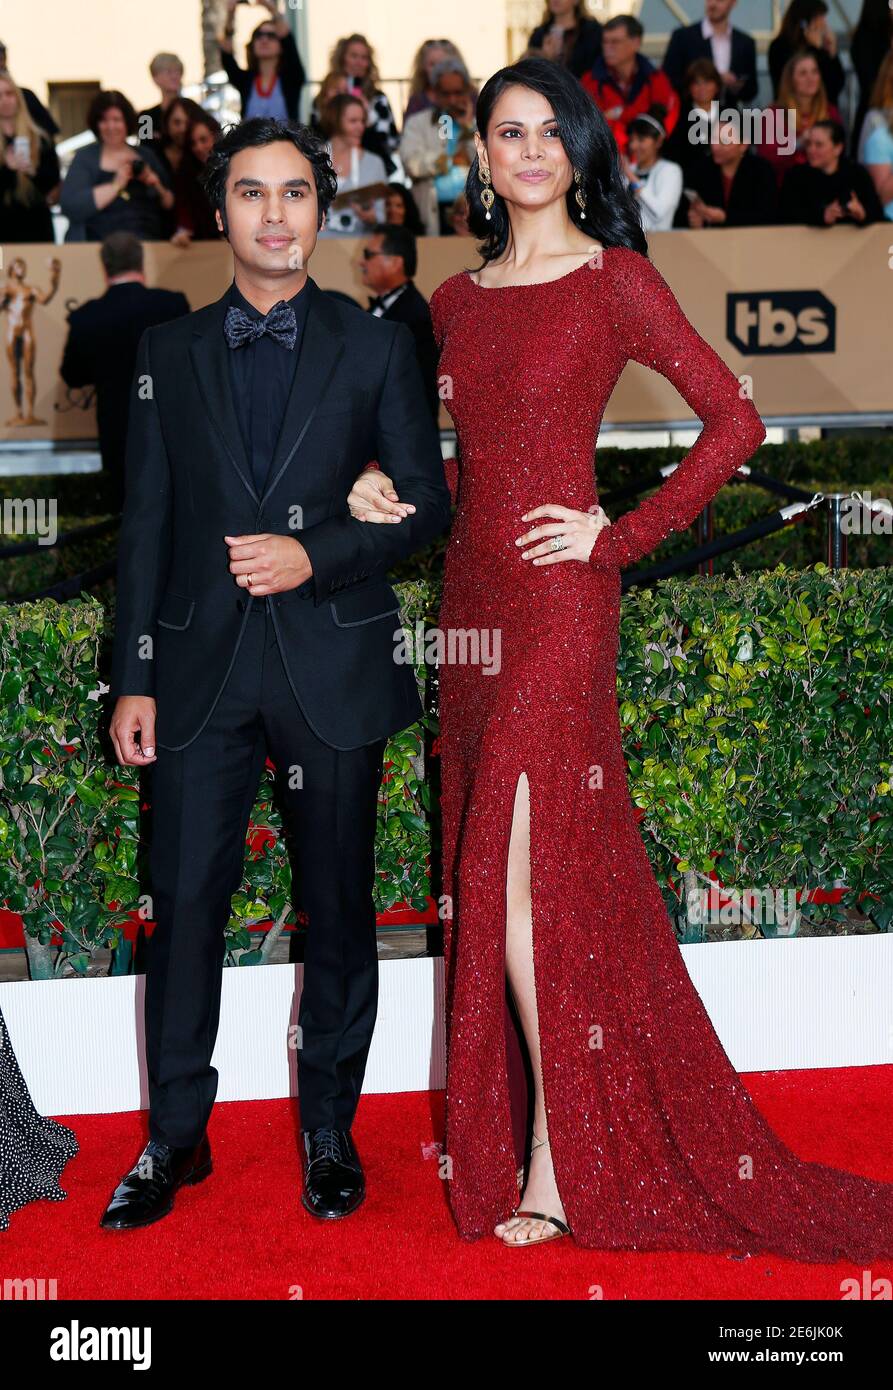 Schauspieler Kunal Nayyar der Comedy-Serie 'The Big Bang Theory' und seine Frau Neha Kapur kommen bei den 22. Screen Actors Guild Awards in Los Angeles, Kalifornien, am 30. Januar 2016 an. REUTERS/Mike Blake Stockfoto